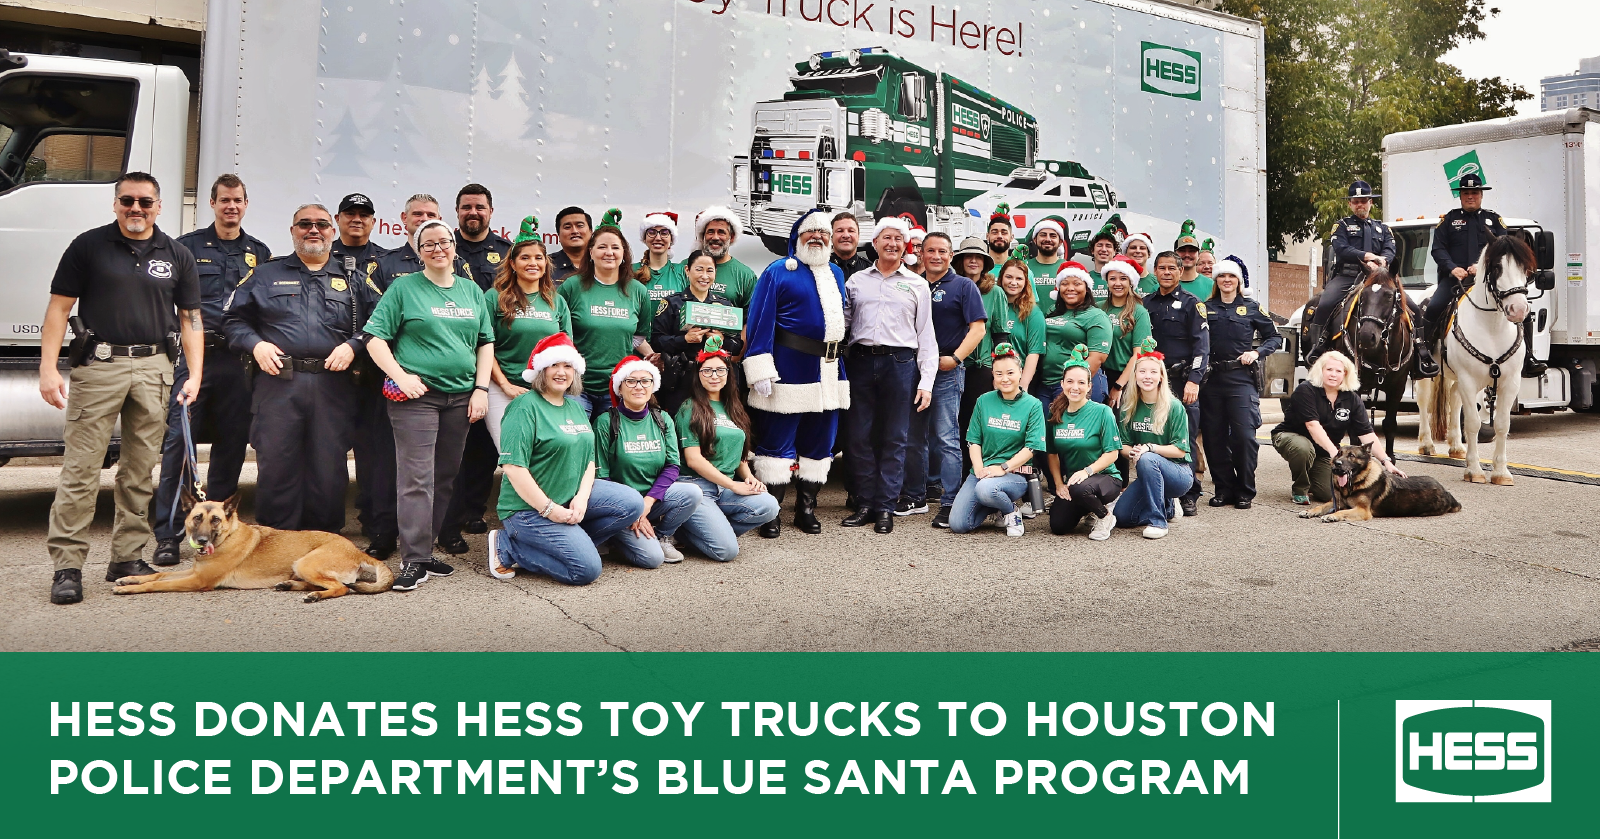 Hess Donates Hess Toy Trucks to Houston Police Department’s Blue Santa Program